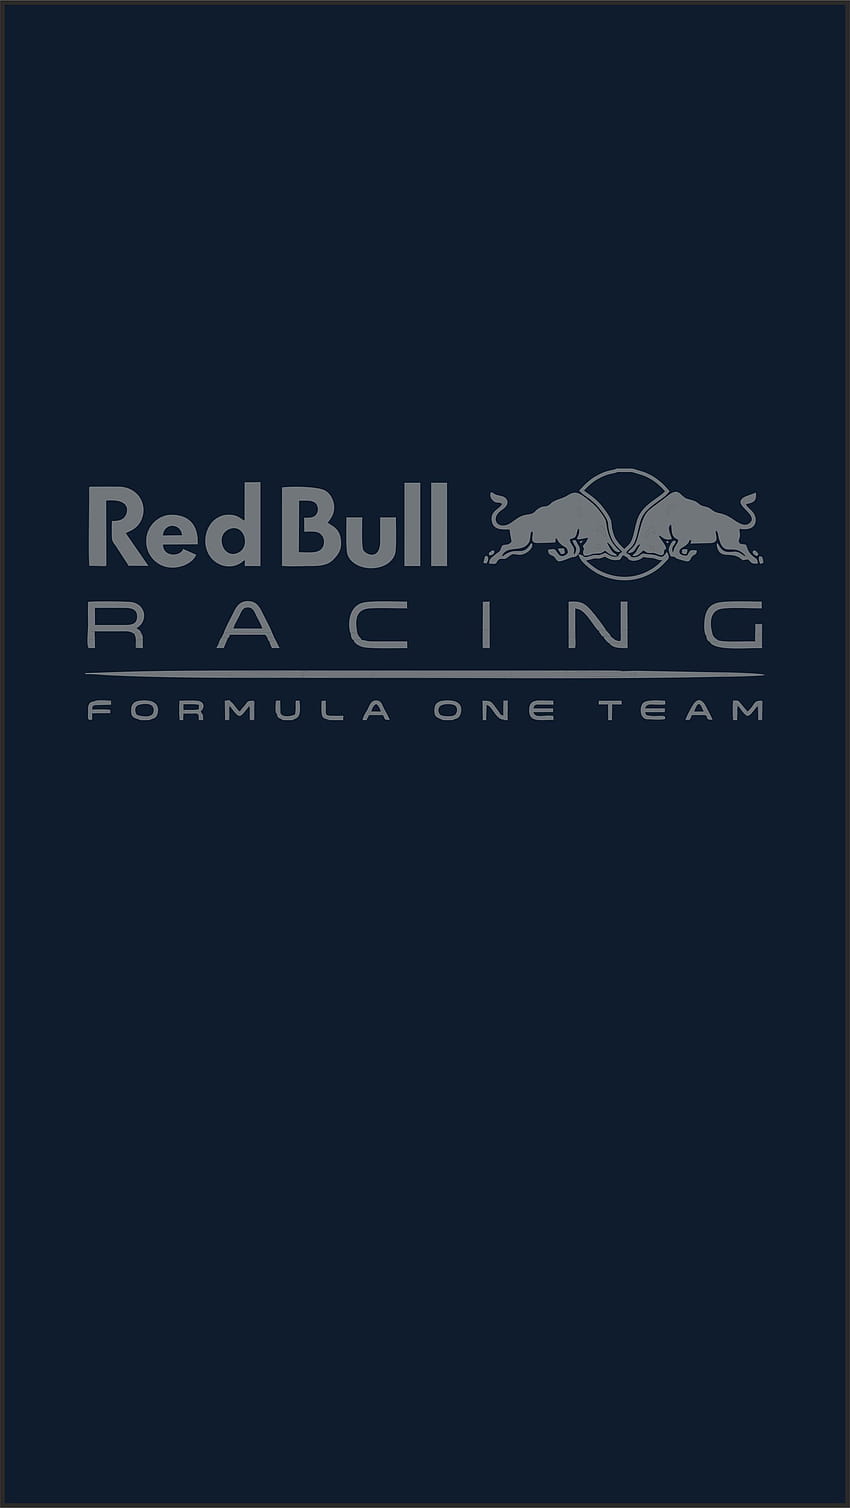 Red Bull Racing, teléfono con logotipo de f1 fondo de pantalla del teléfono